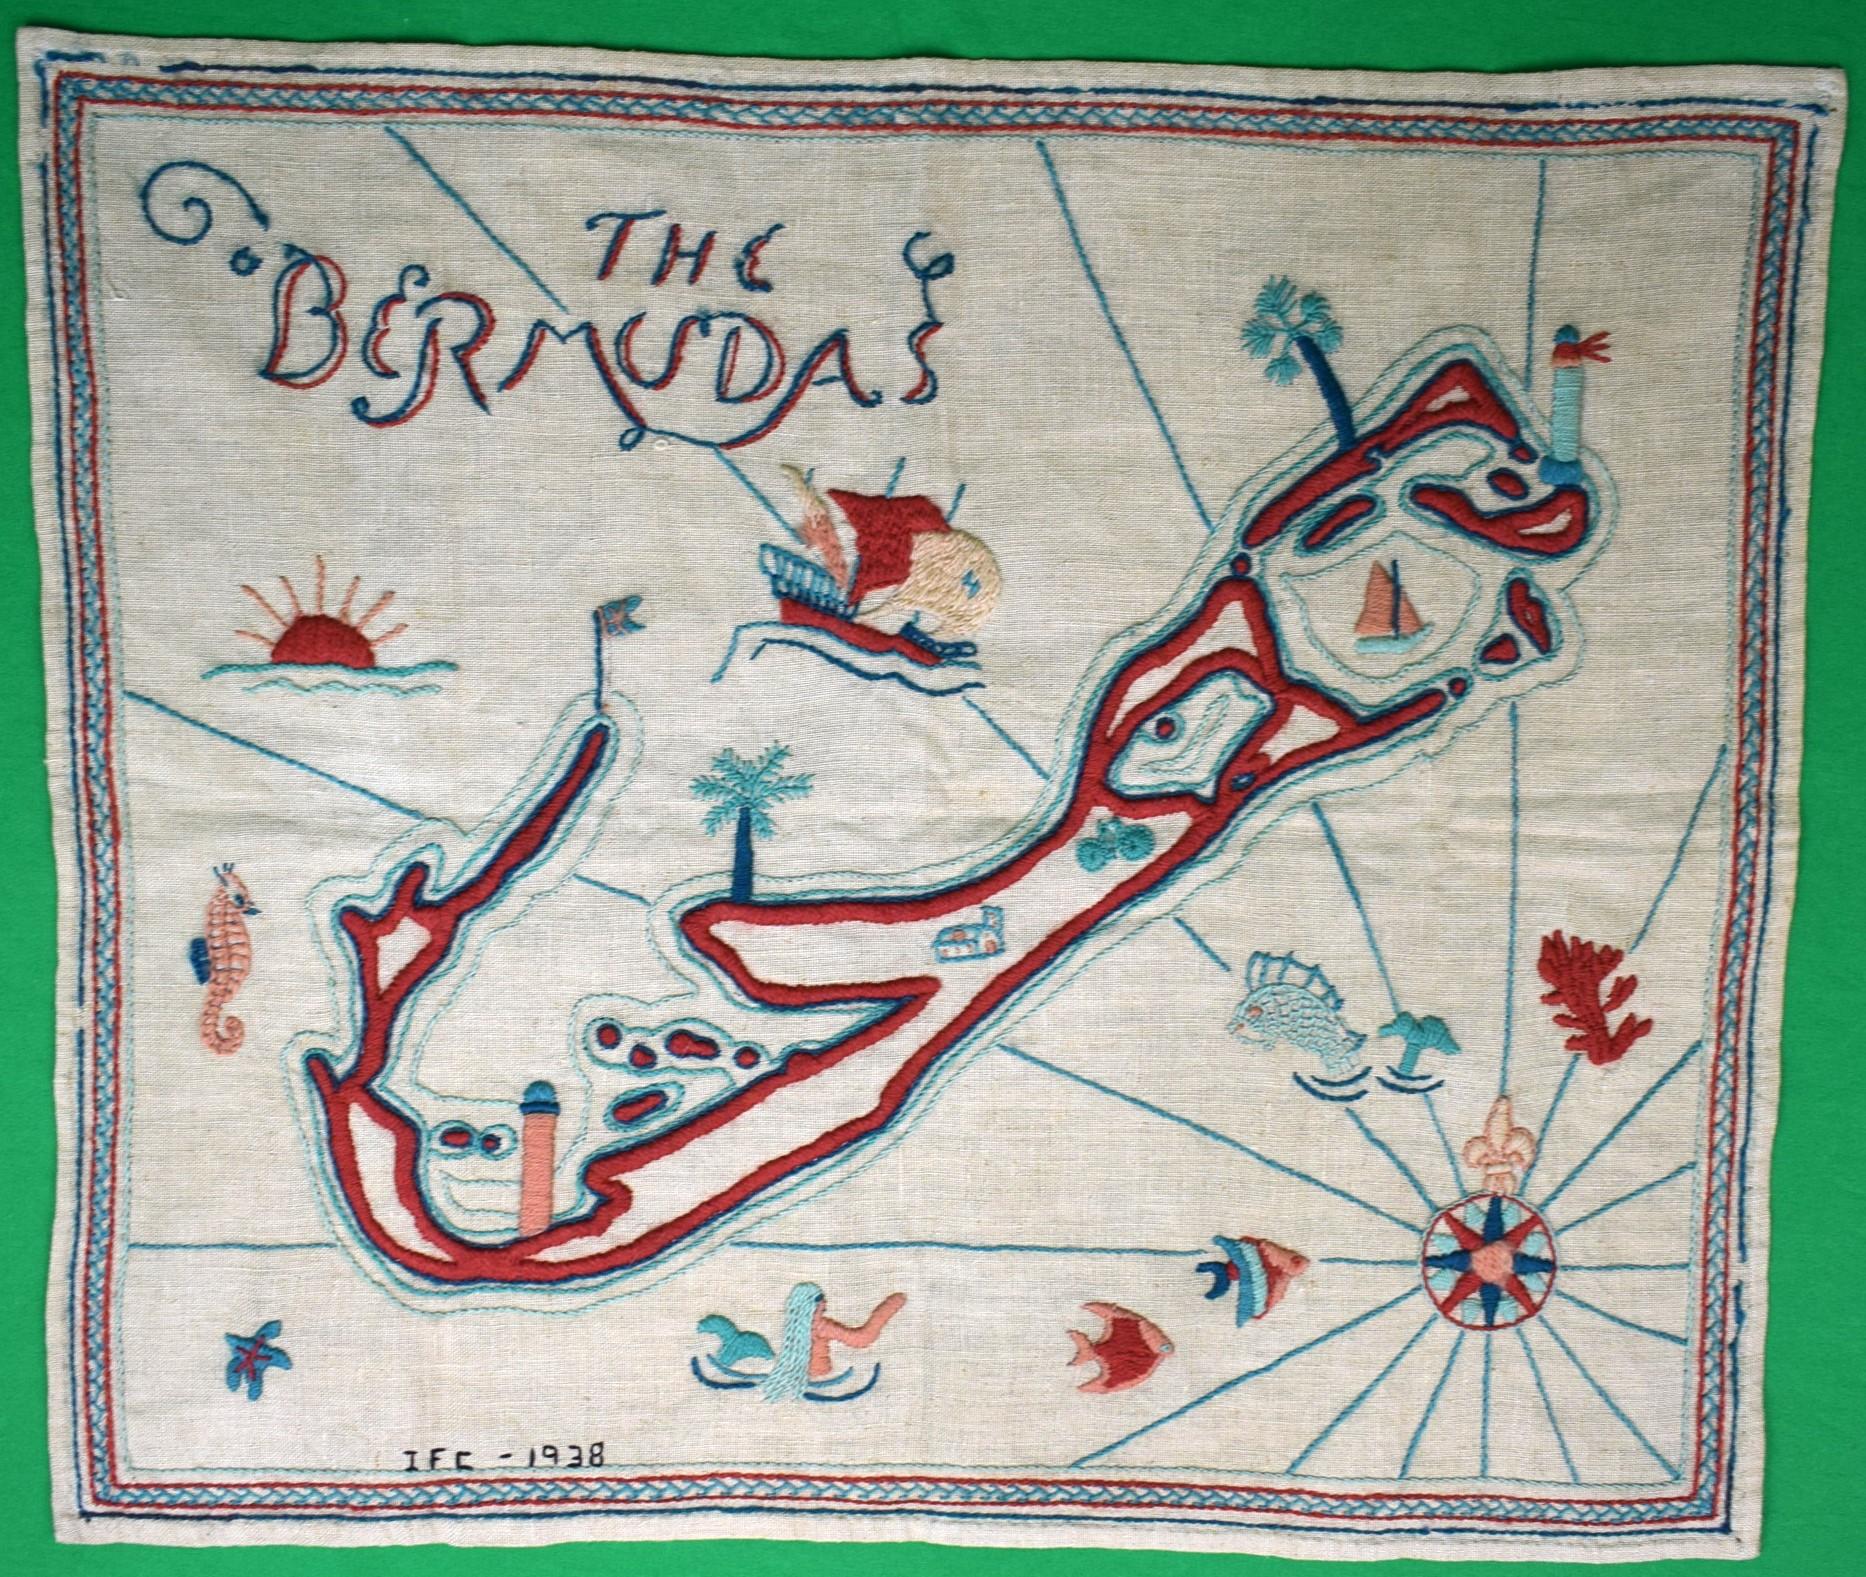 "The Bermudas Hand-Stitch by Stitch by Stitch c1938 Island Map" (Les Bermudes) - Art de Unknown